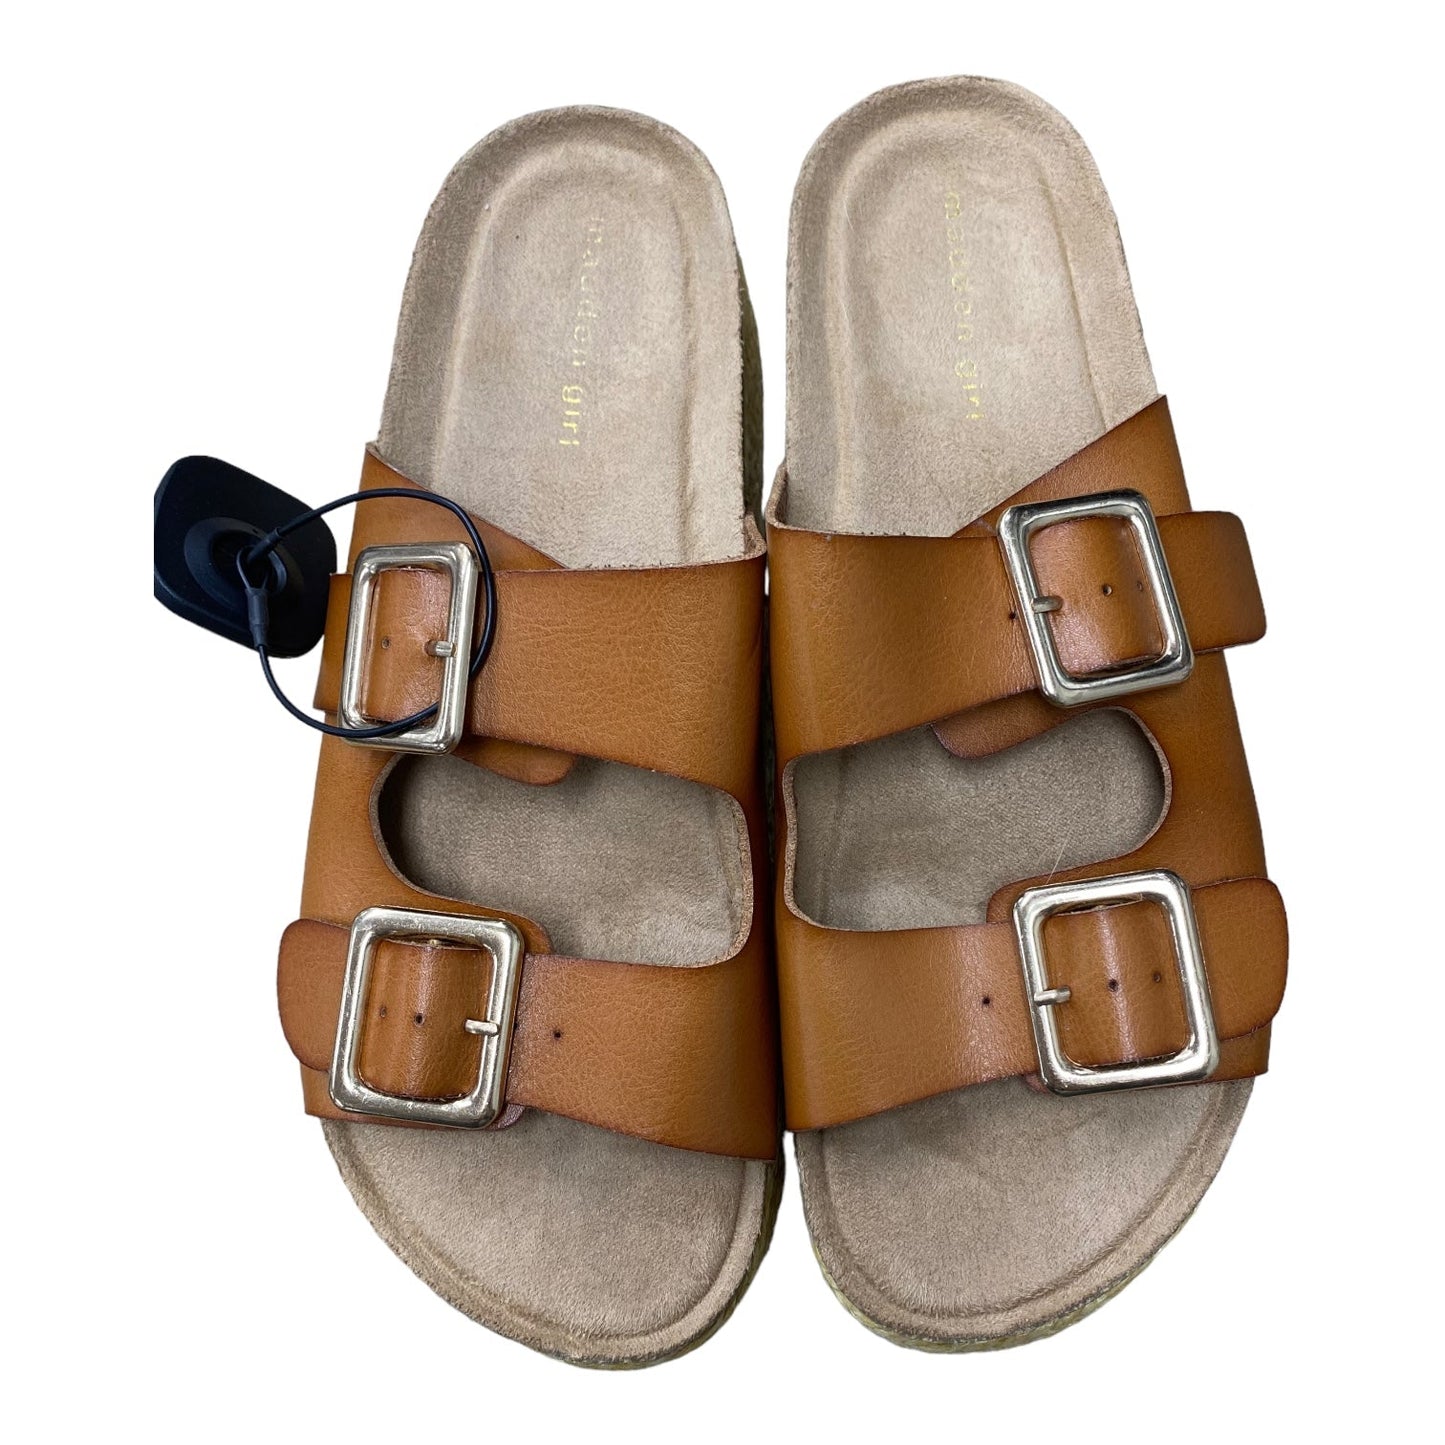 Sandals Heels Platform By Madden Girl  Size: 11